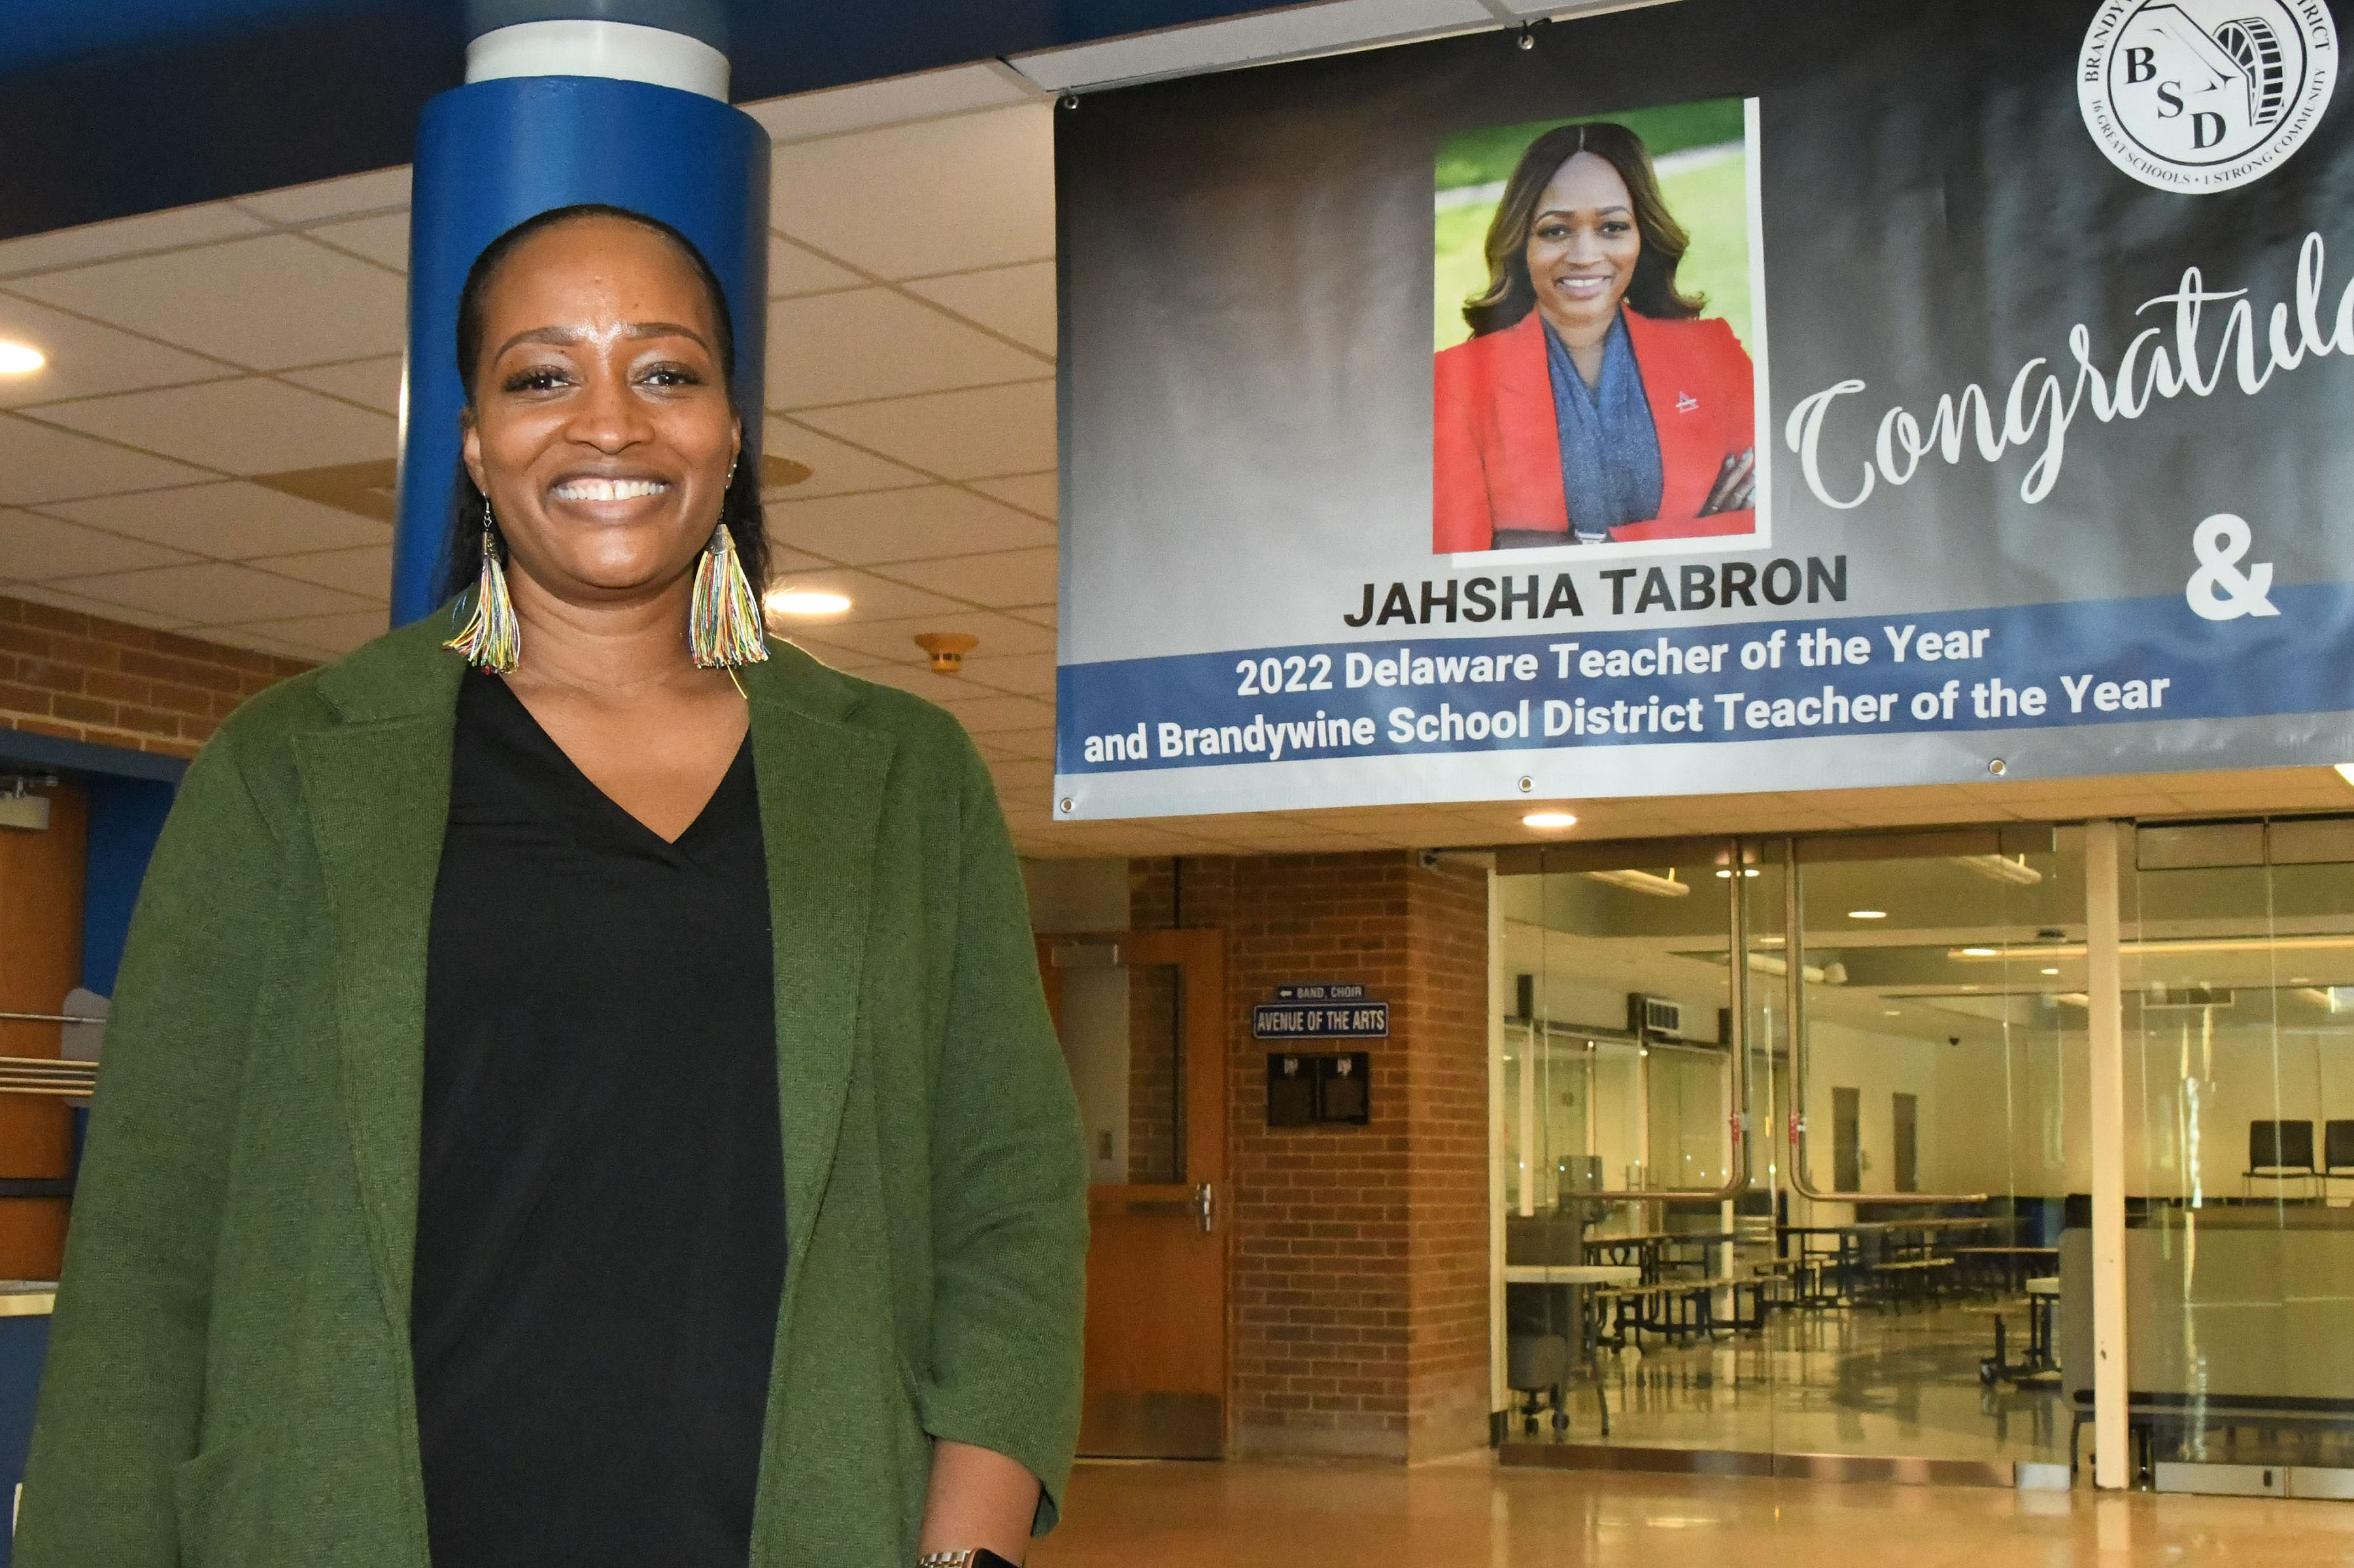 Jahsha Tabron, Del State alumna, Del Teacher of the Year